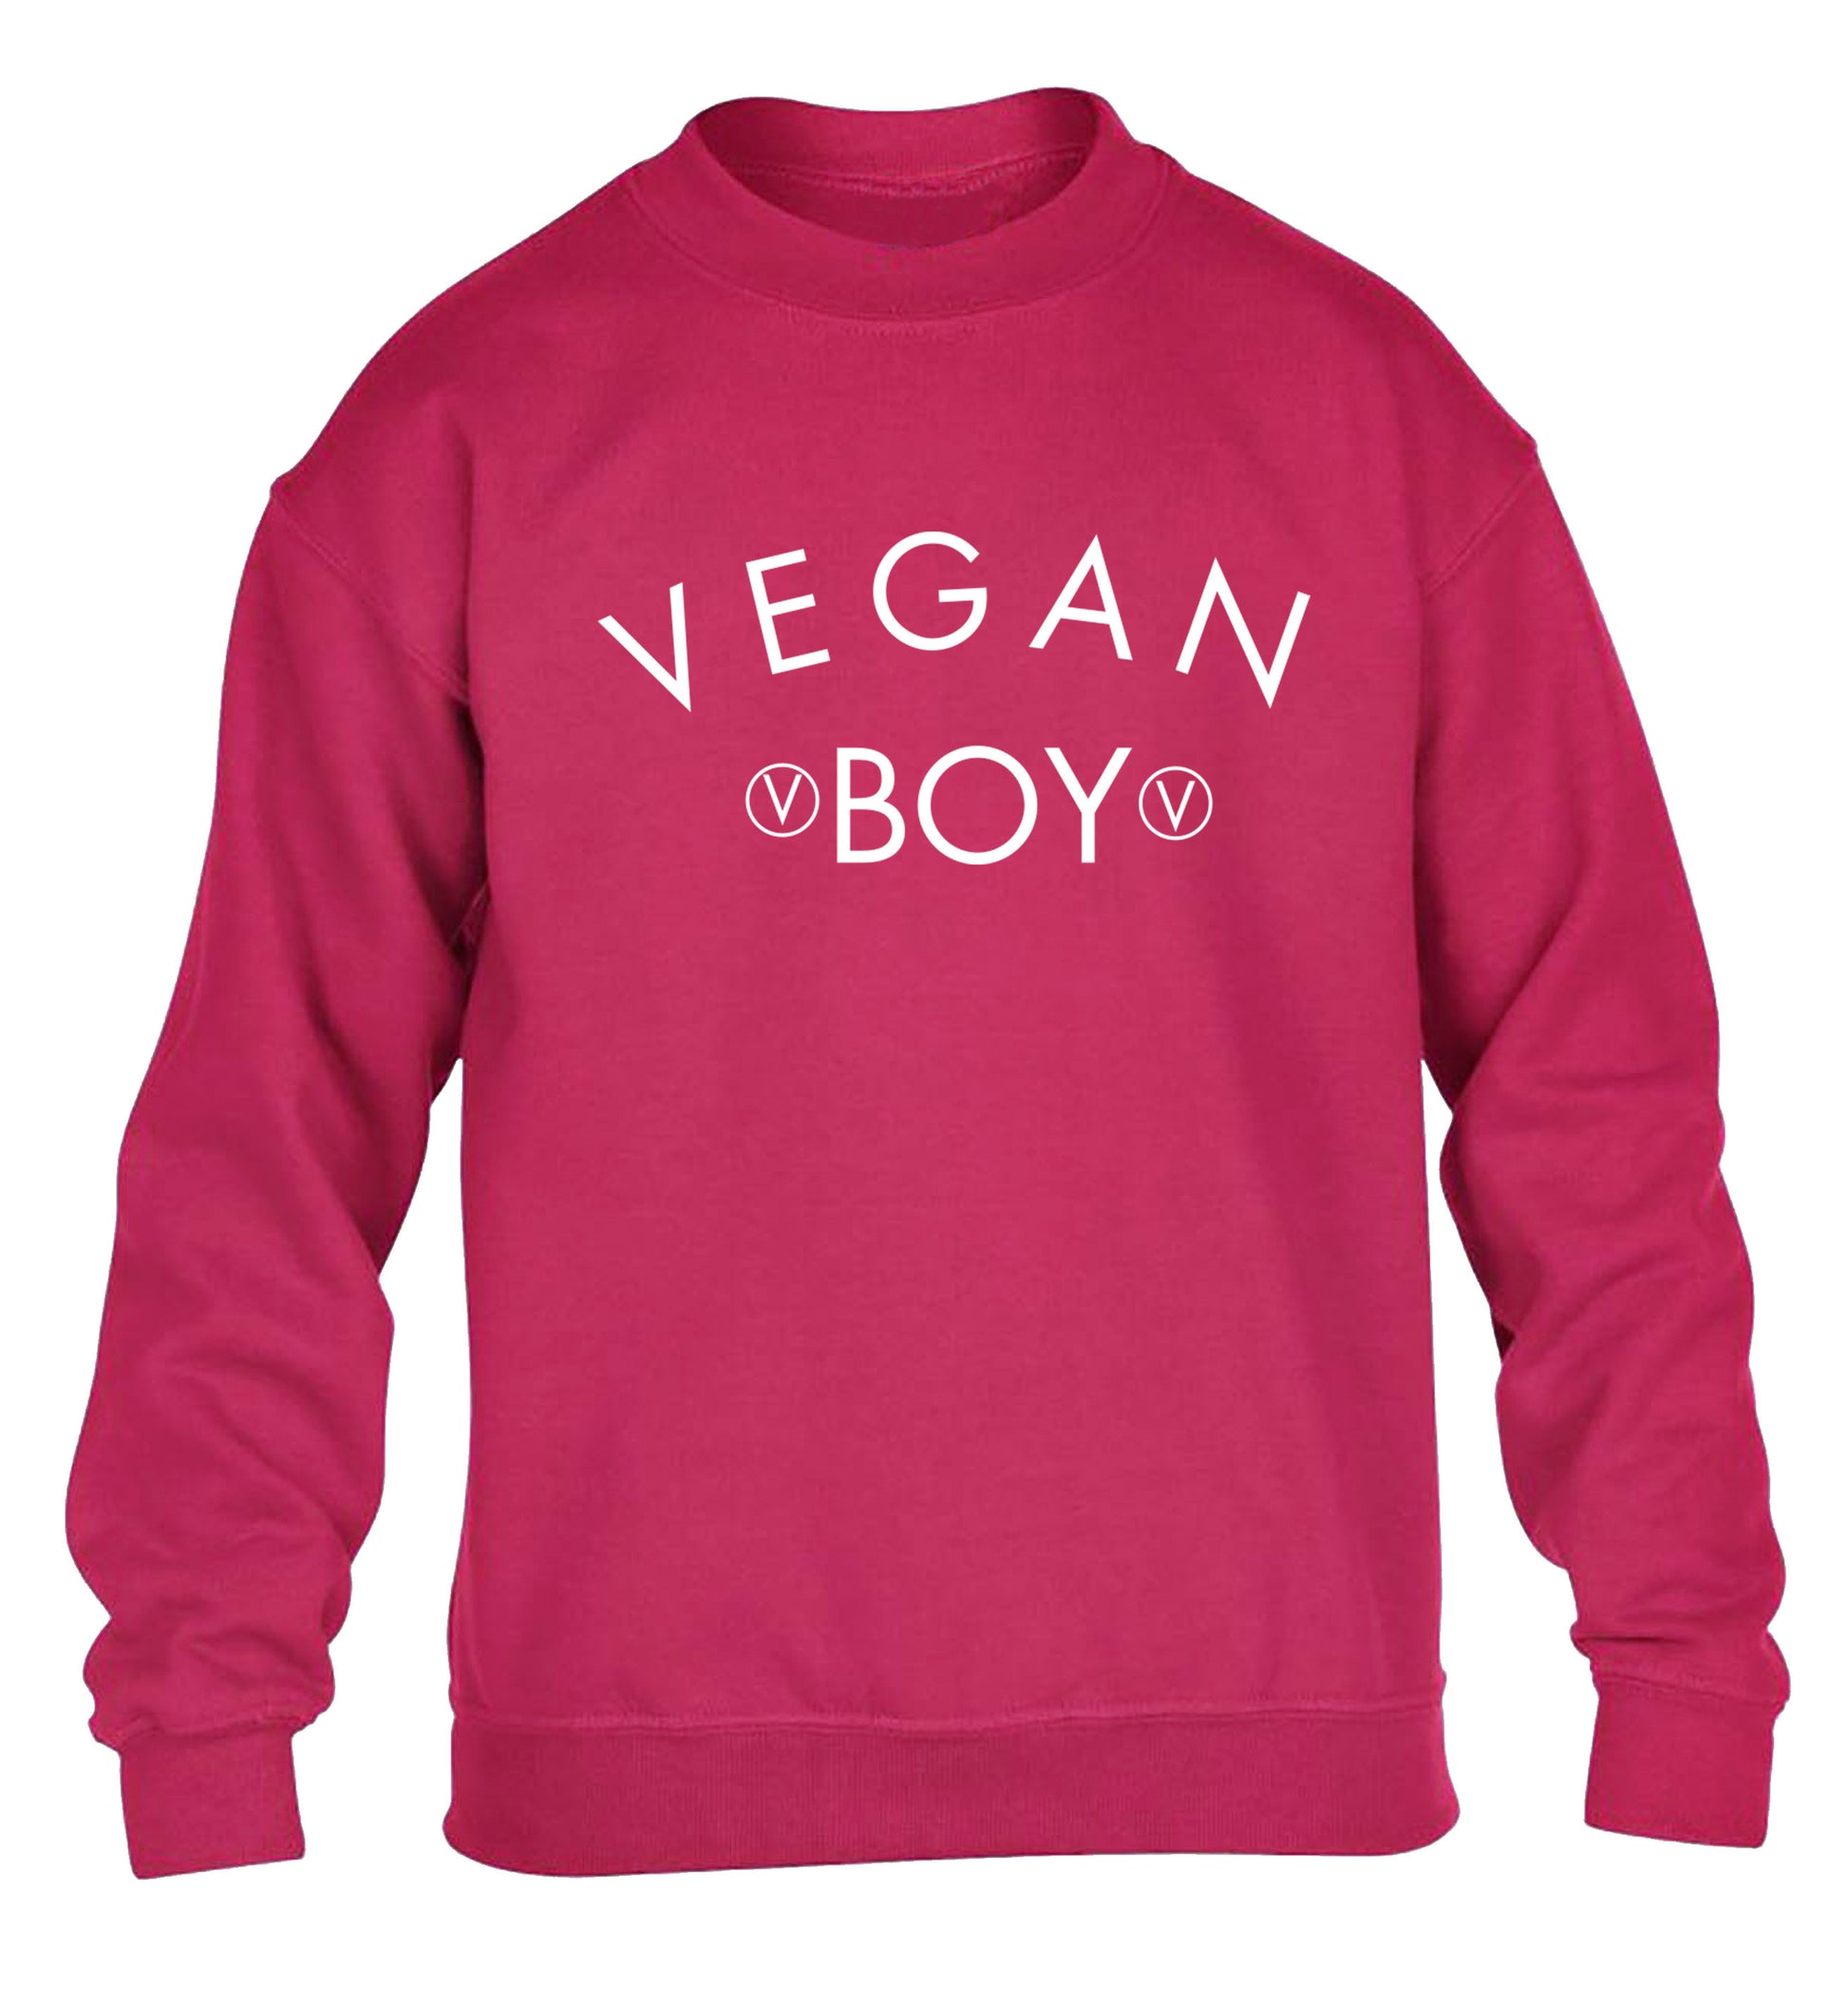 Vegan boy children's pink sweater 12-14 Years